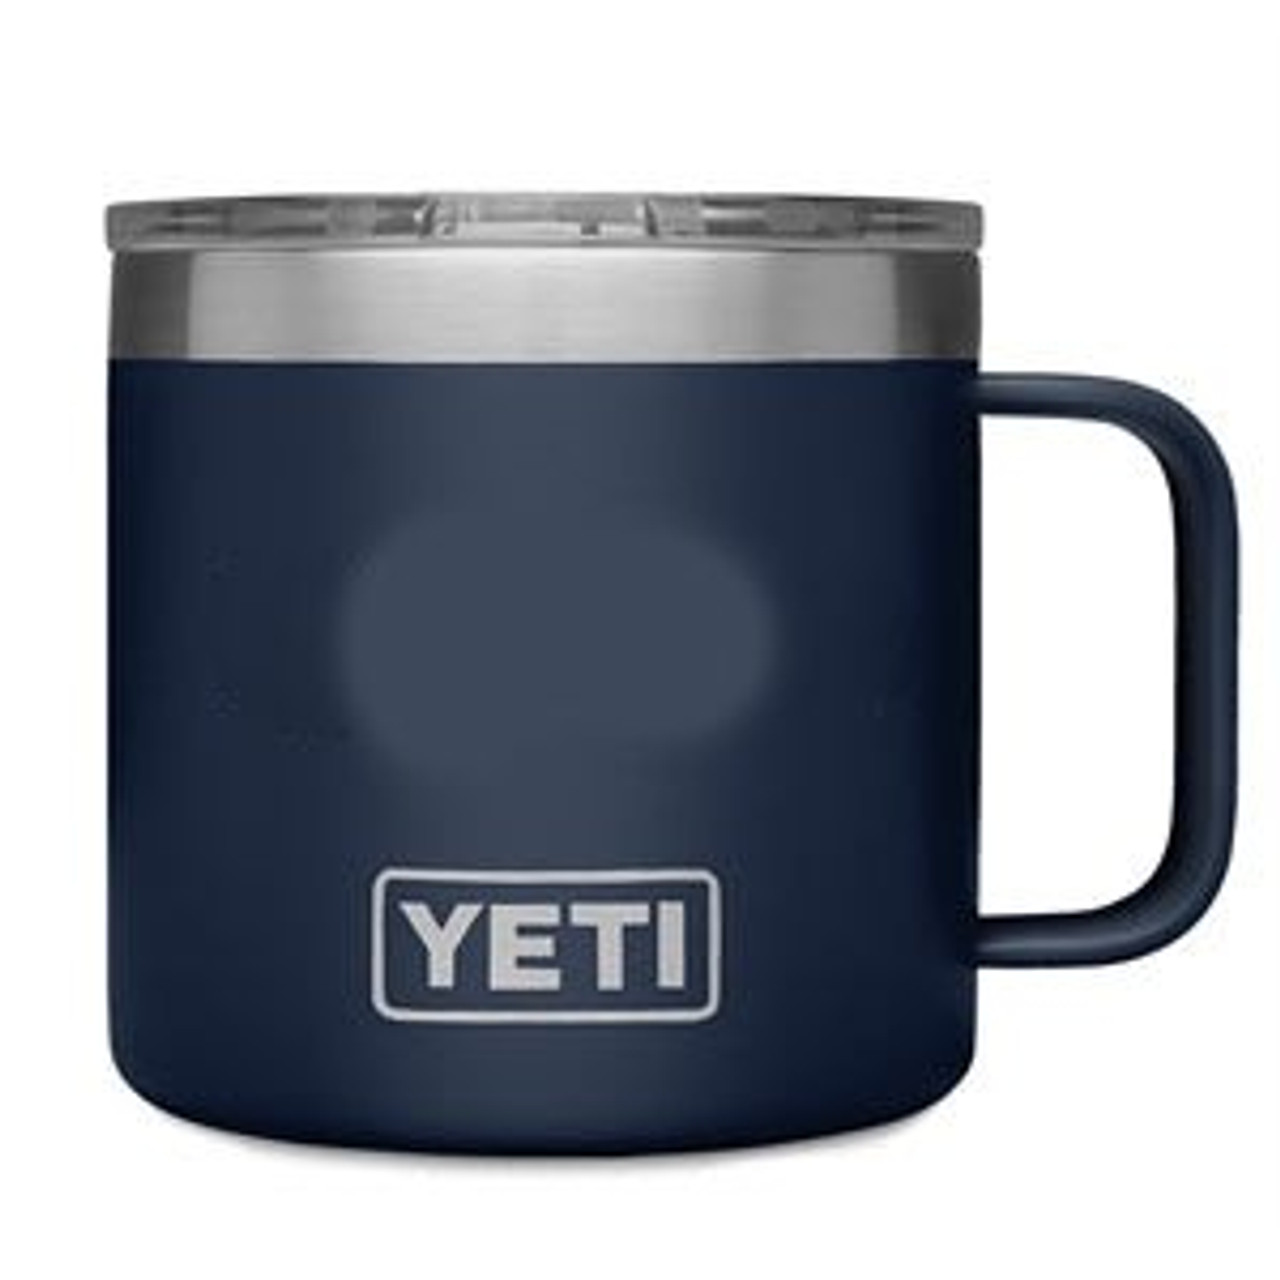 14 Types Of YETI Drinkware, Ranked